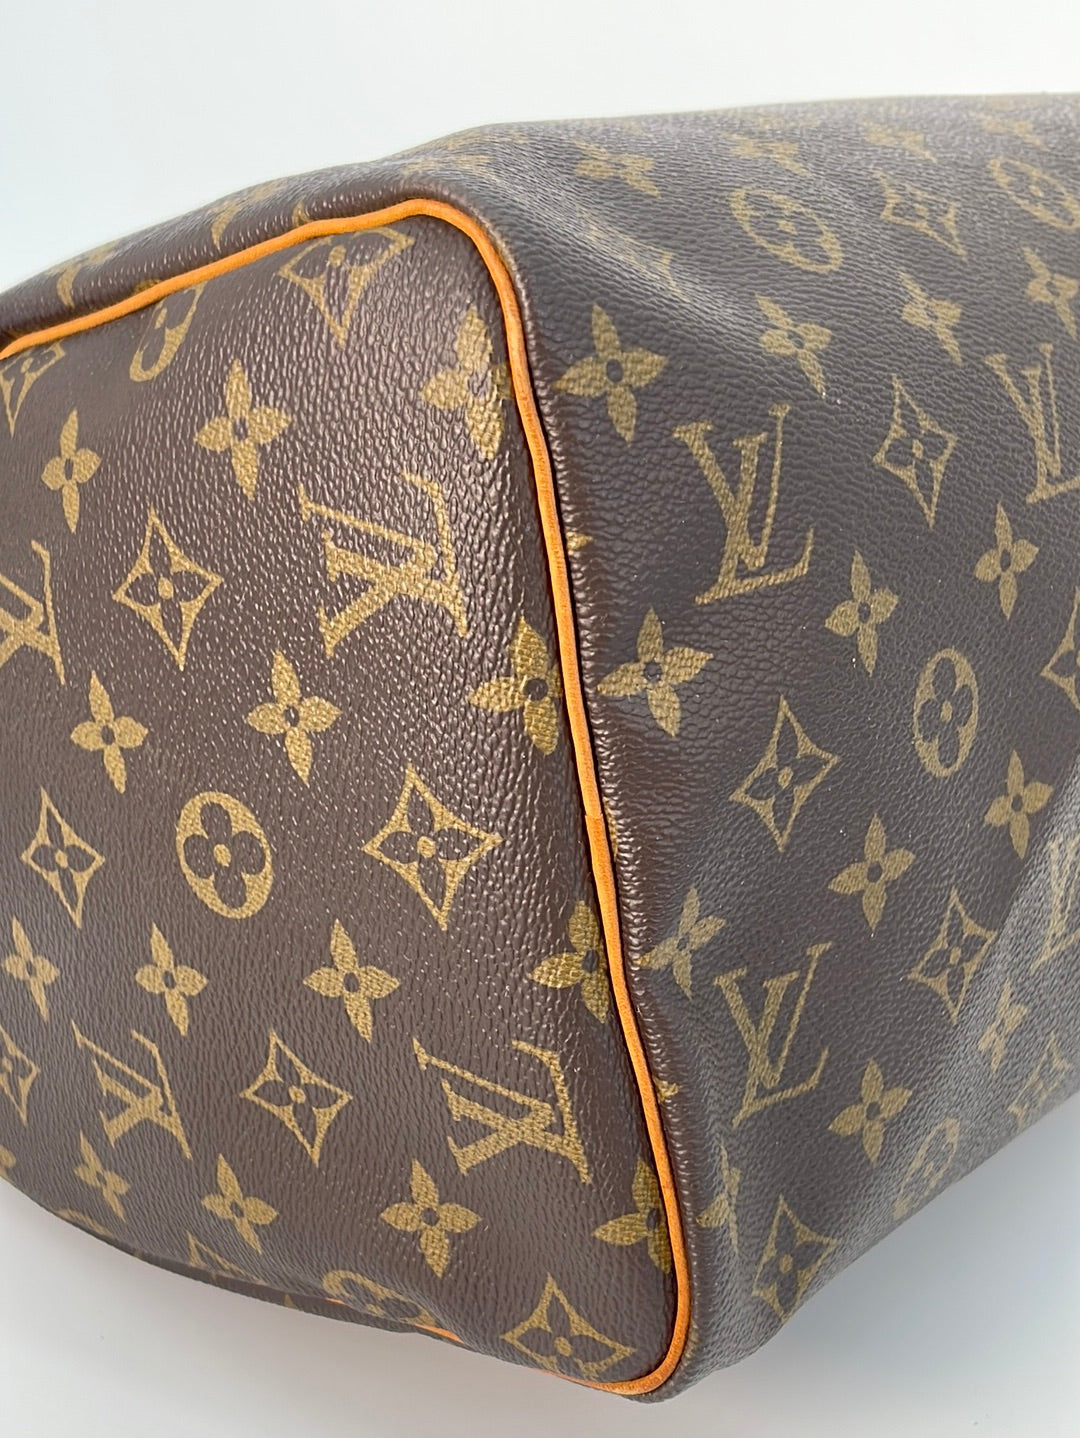 Authentic Louis Vuitton Monogram Vintage 1999 Speedy 30 Bag Restored!